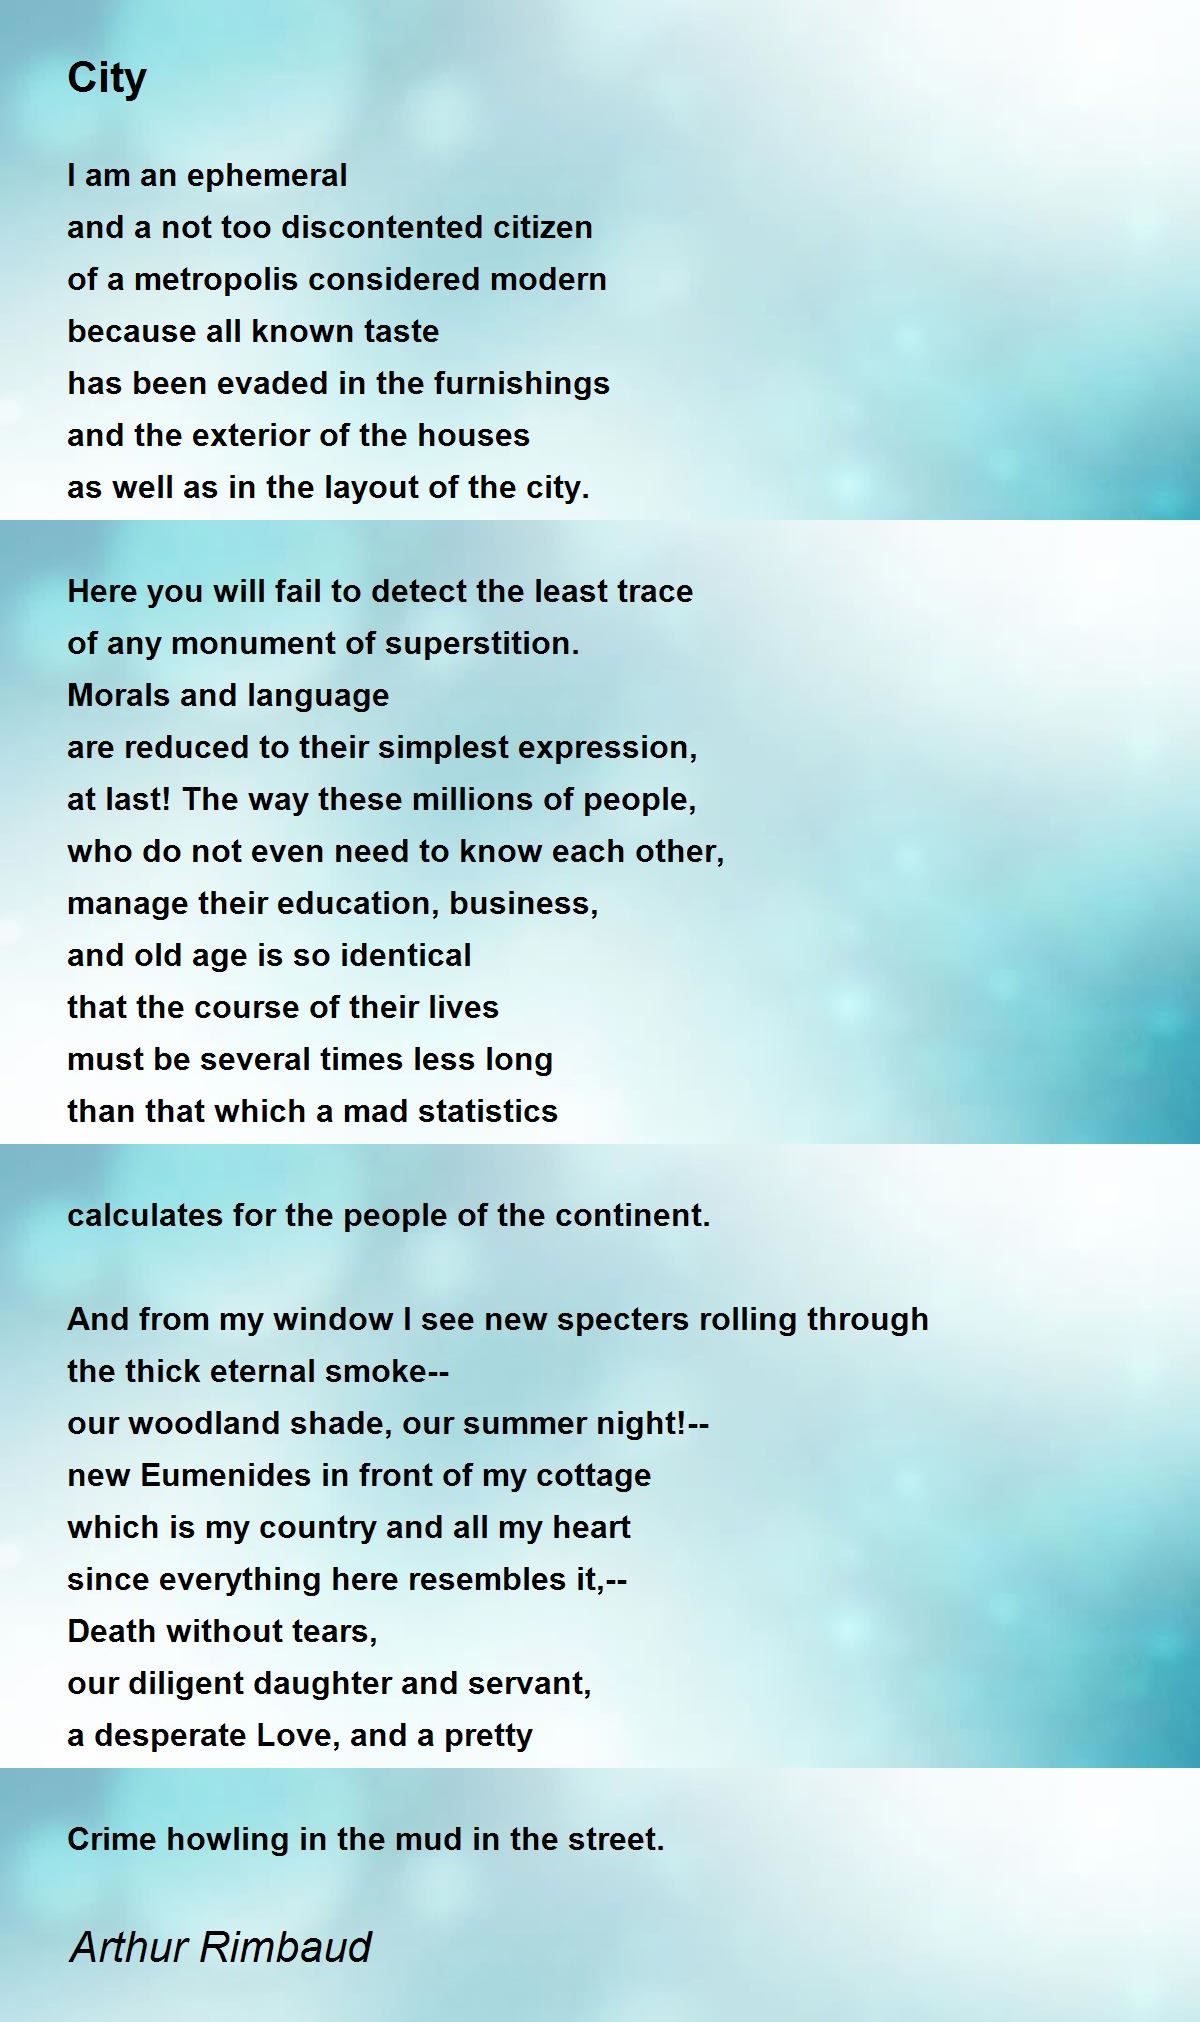 City by Arthur Rimbaud - City Poem